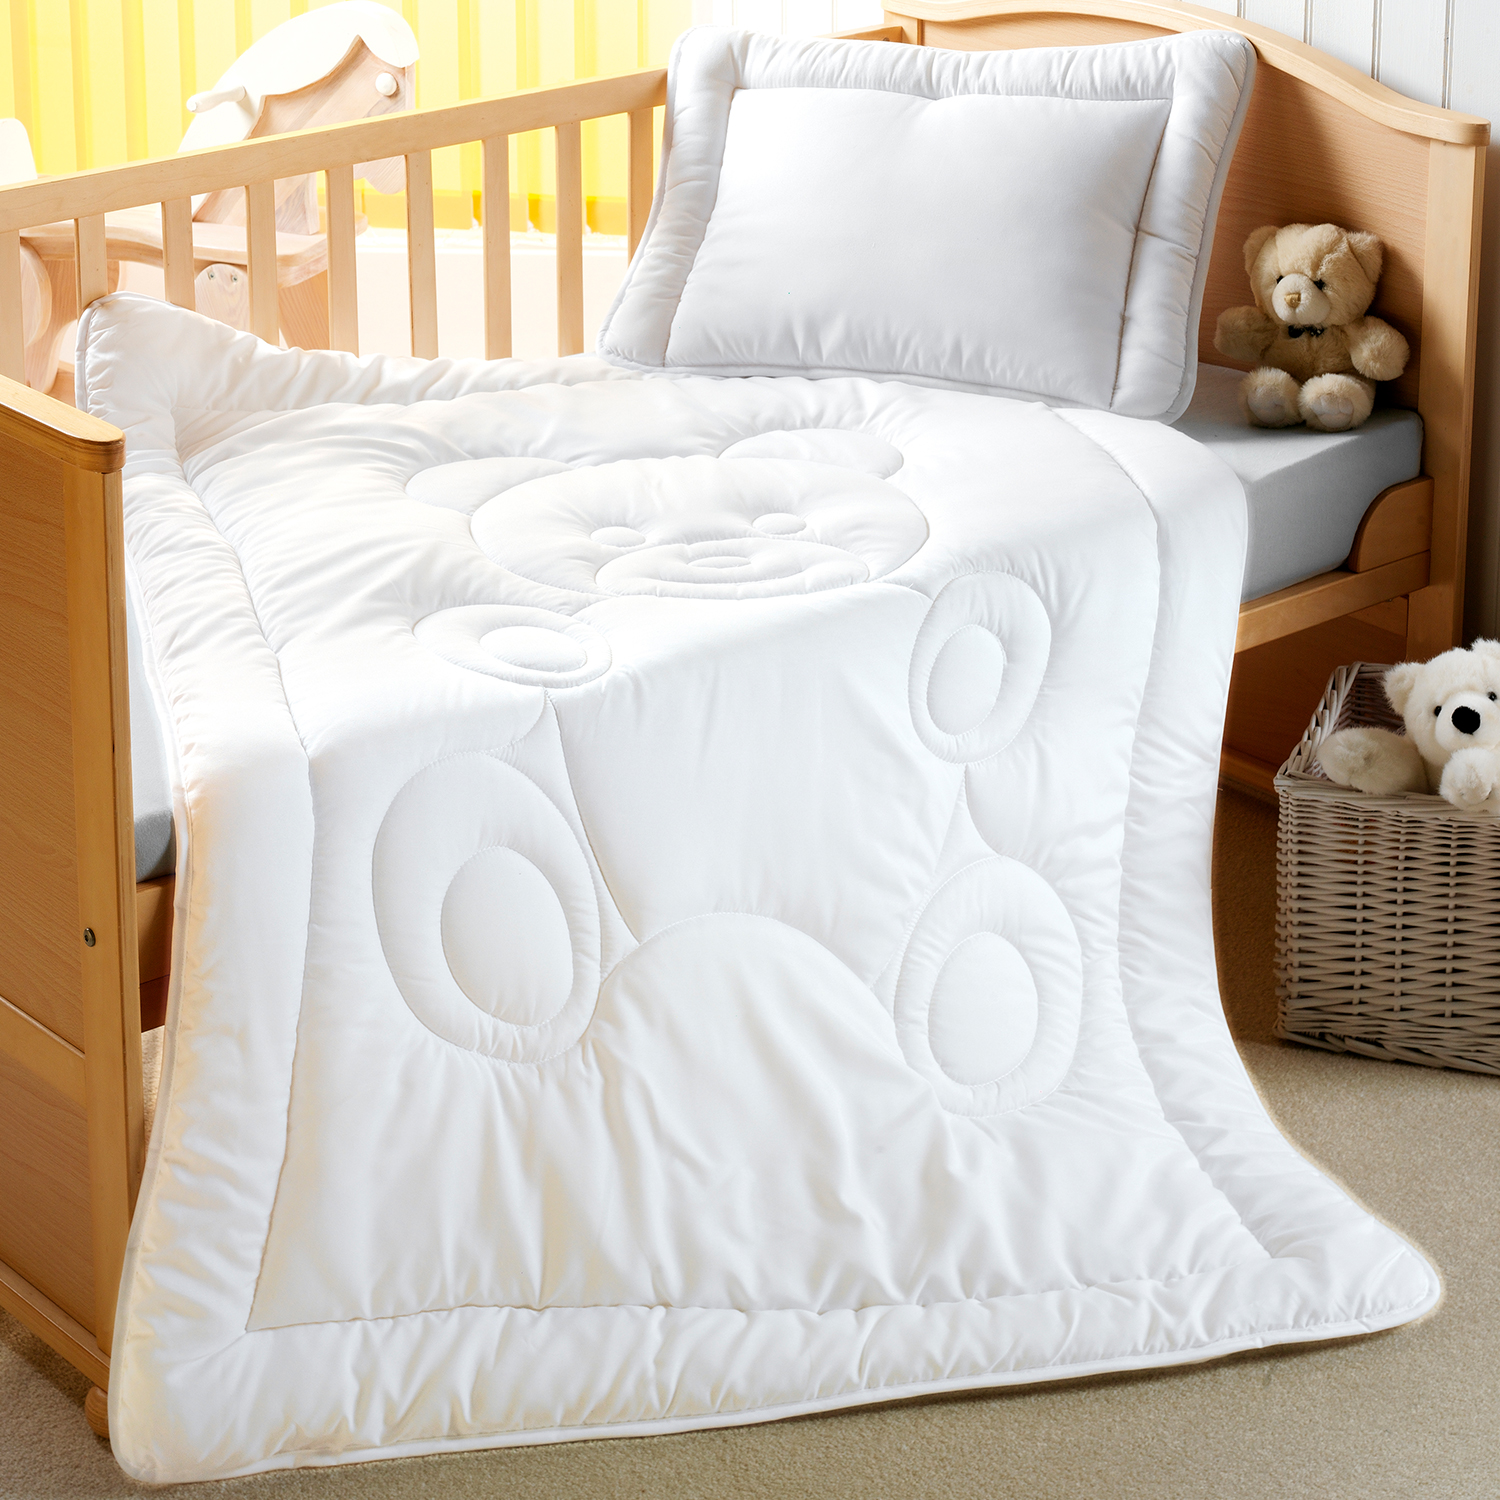 Unterbett Baby Bettset Oberbett Kinderbett Set 3Teilig 100% Wolle Kissen 